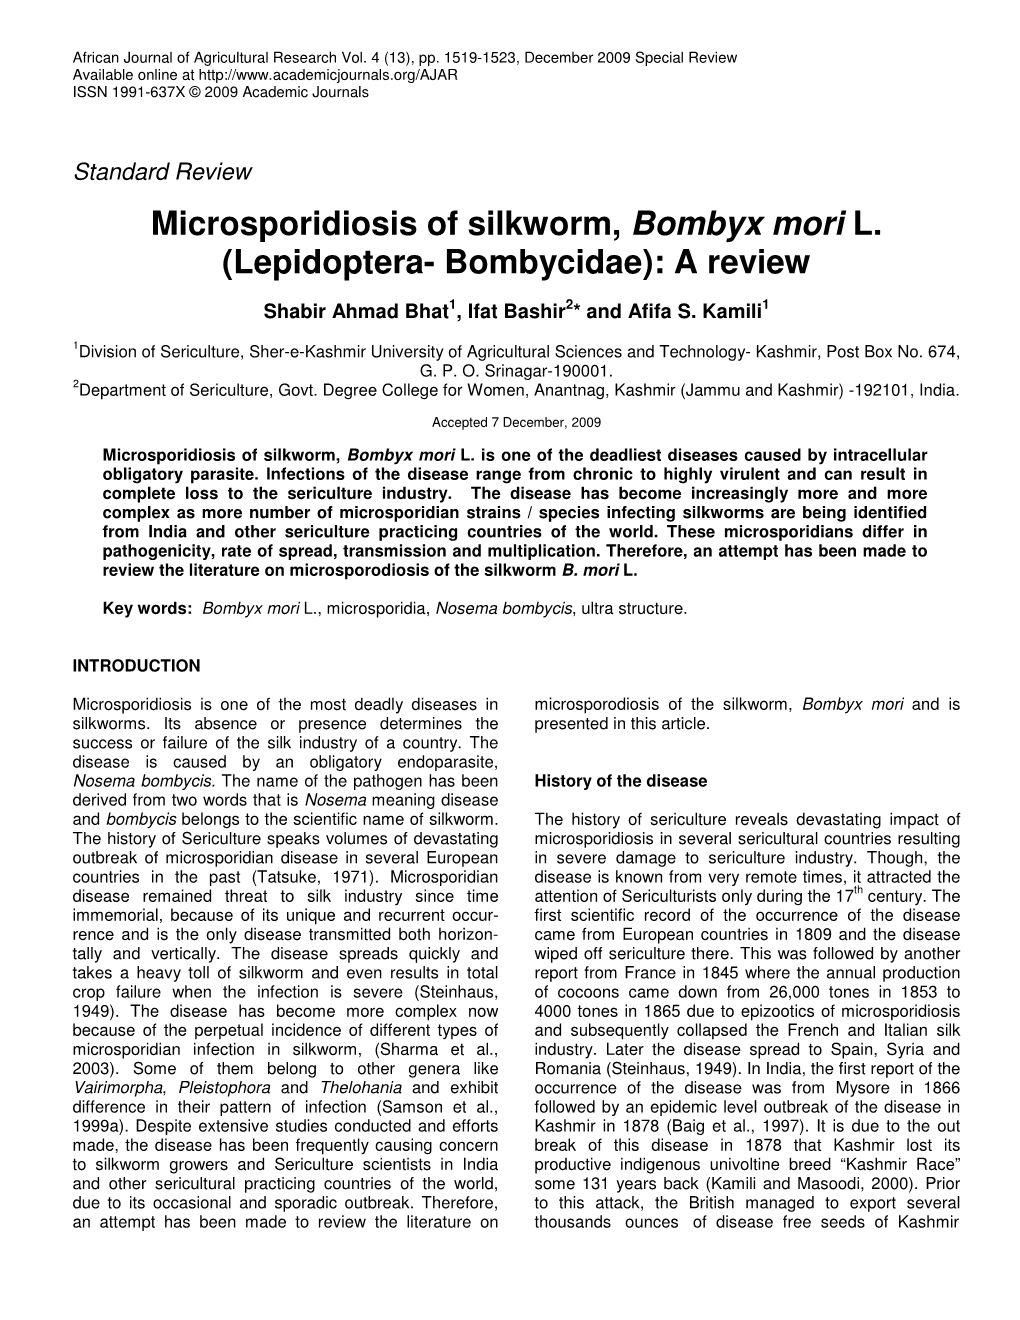 Microsporidiosis of Silkworm, Bombyx Mori L. (Lepidoptera- Bombycidae): a Review